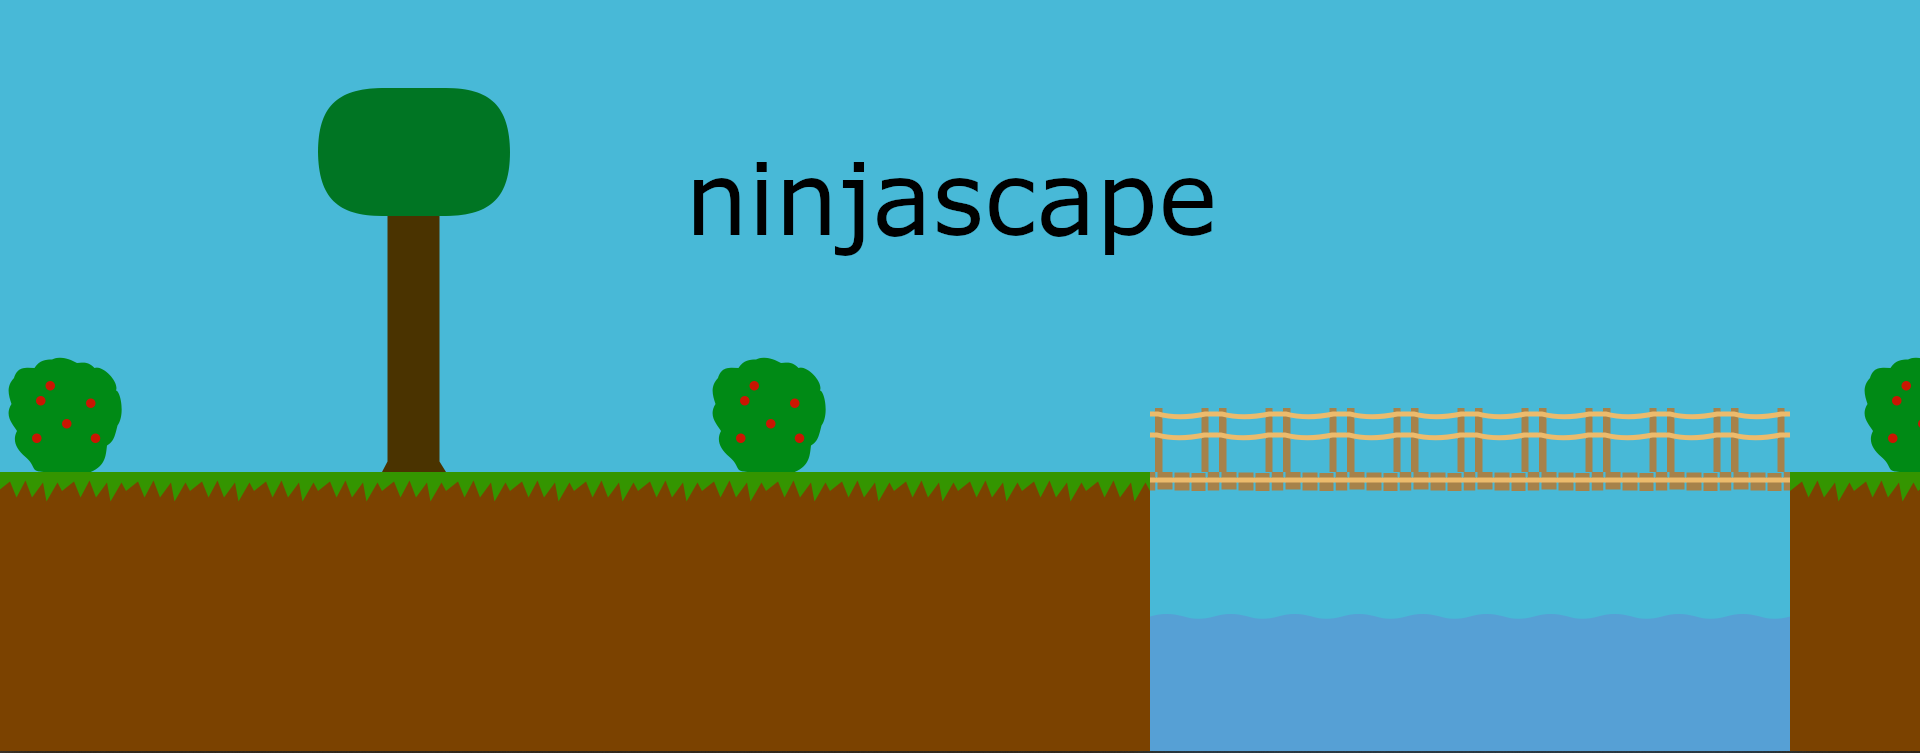 ninjascape